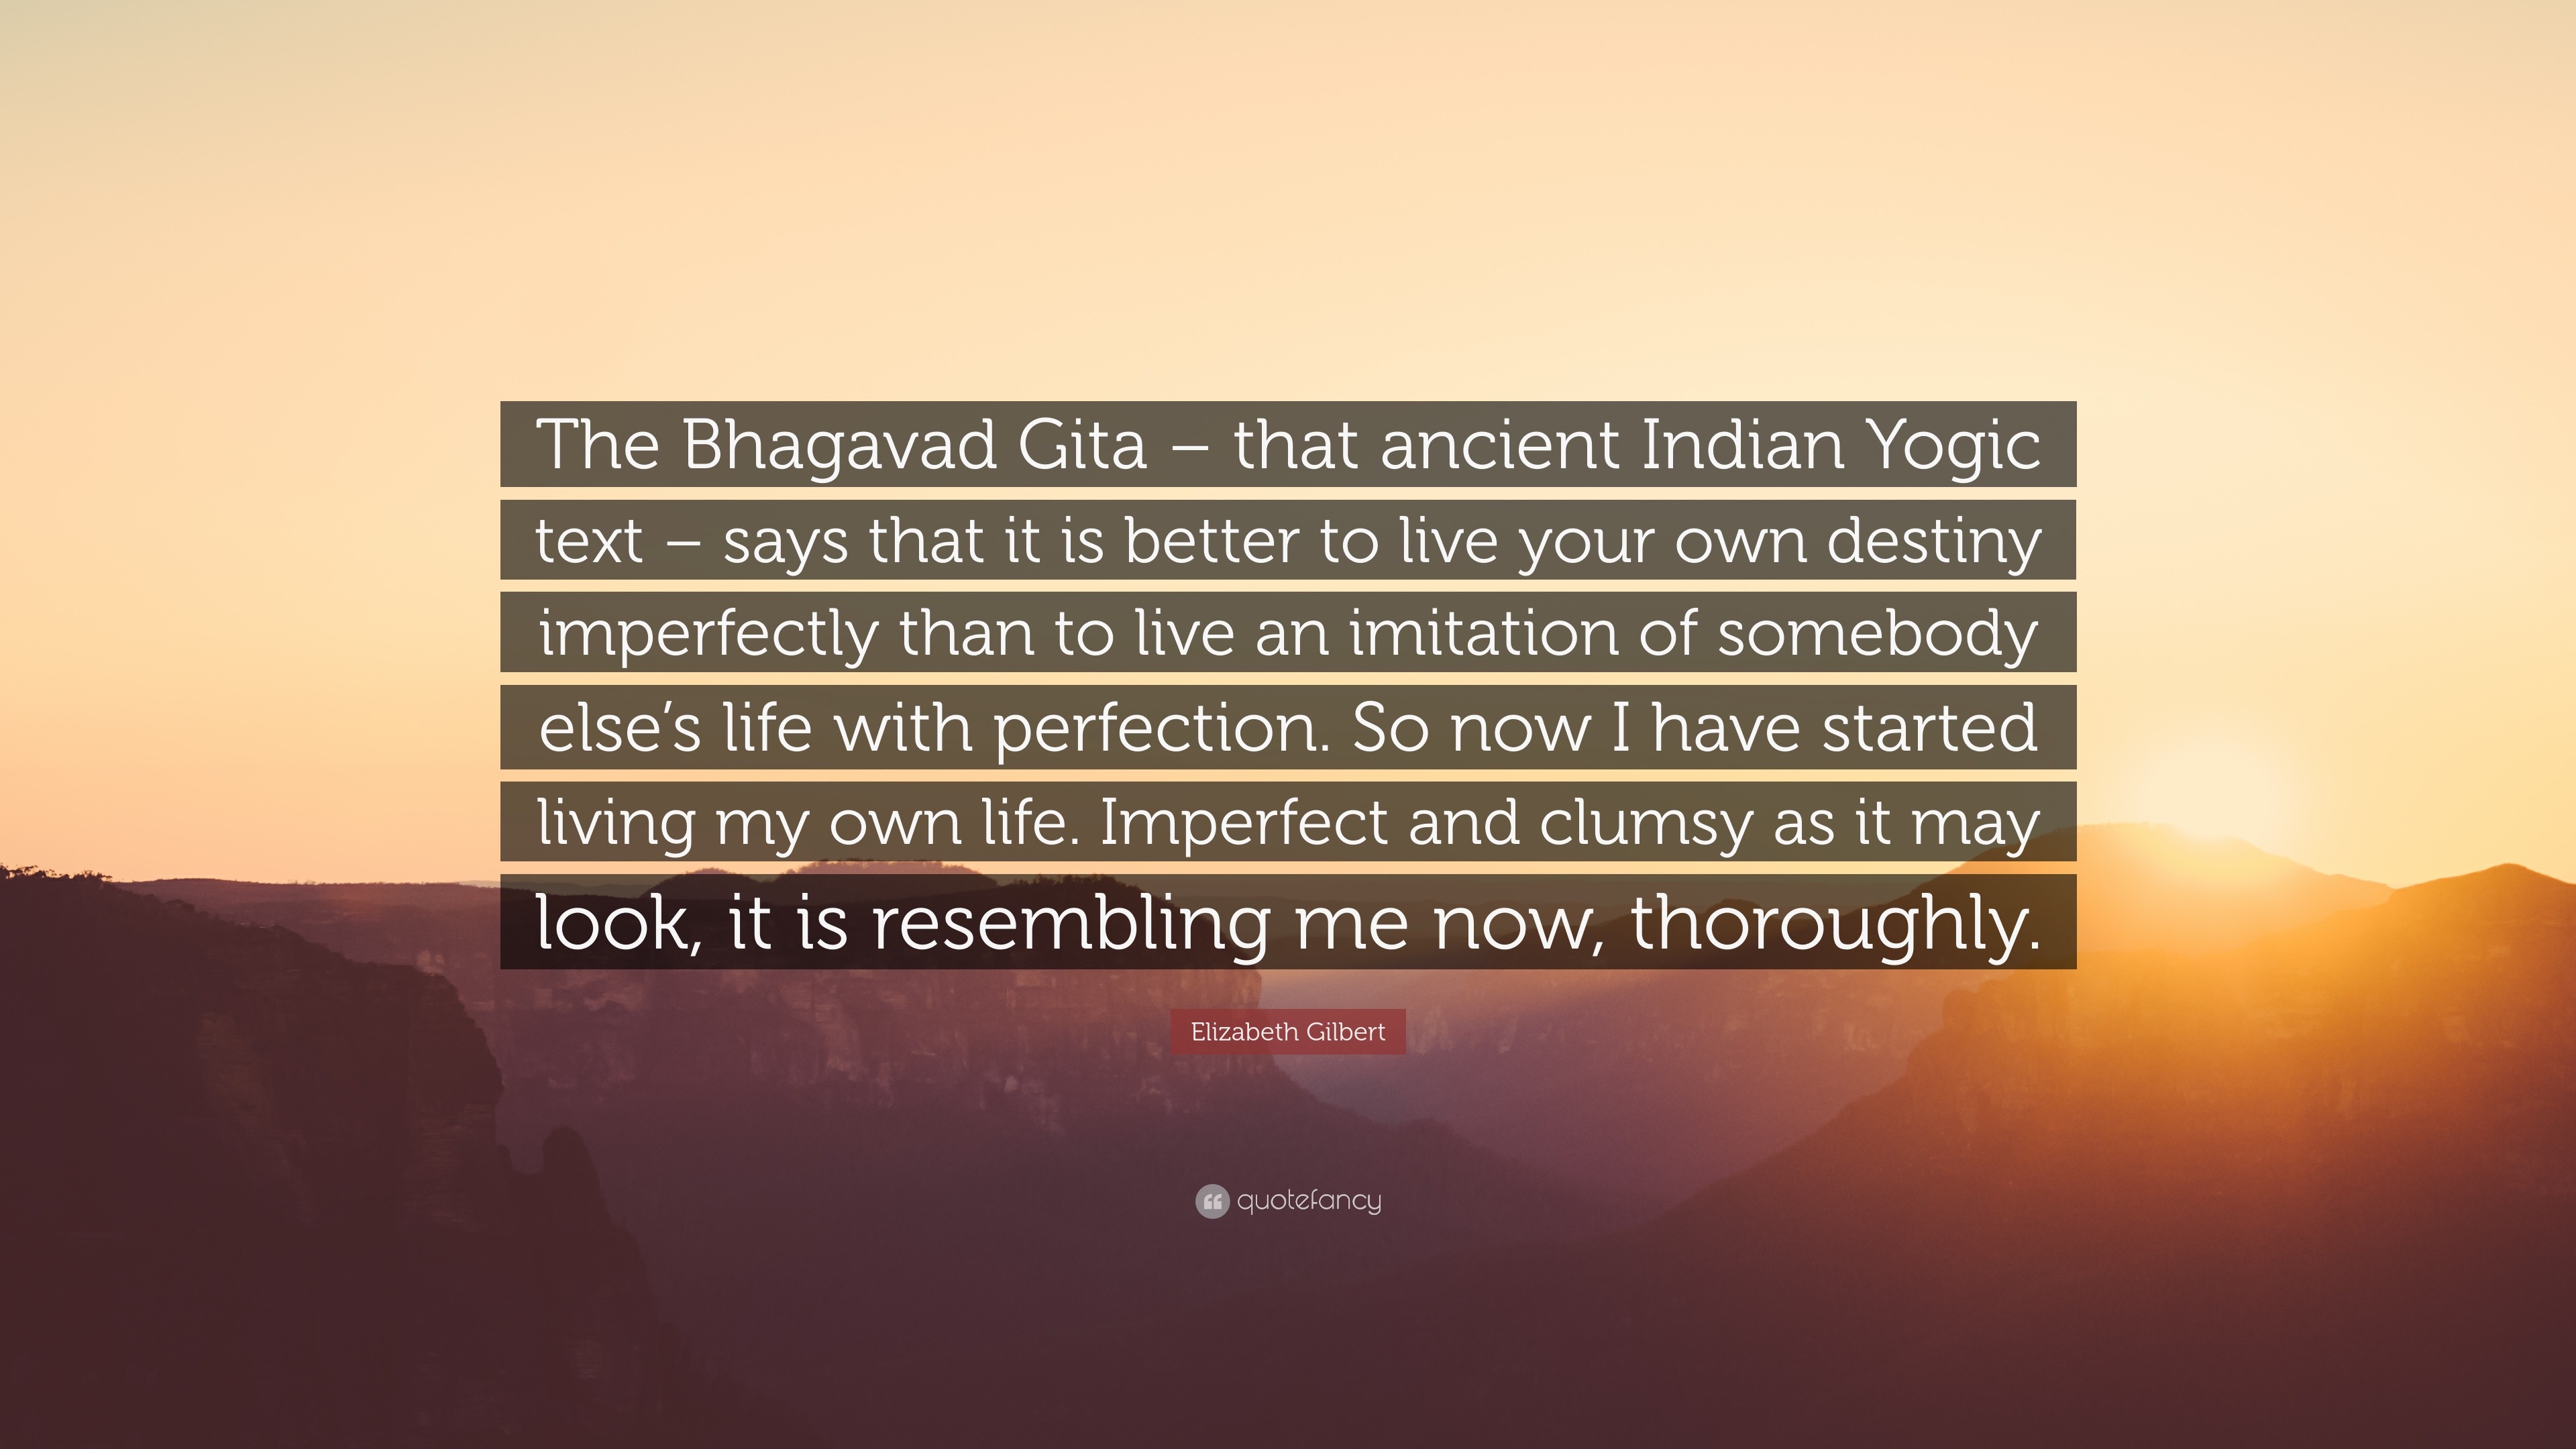 Elizabeth Gilbert Quote “The Bhagavad Gita – that ancient Indian Yogic text – says